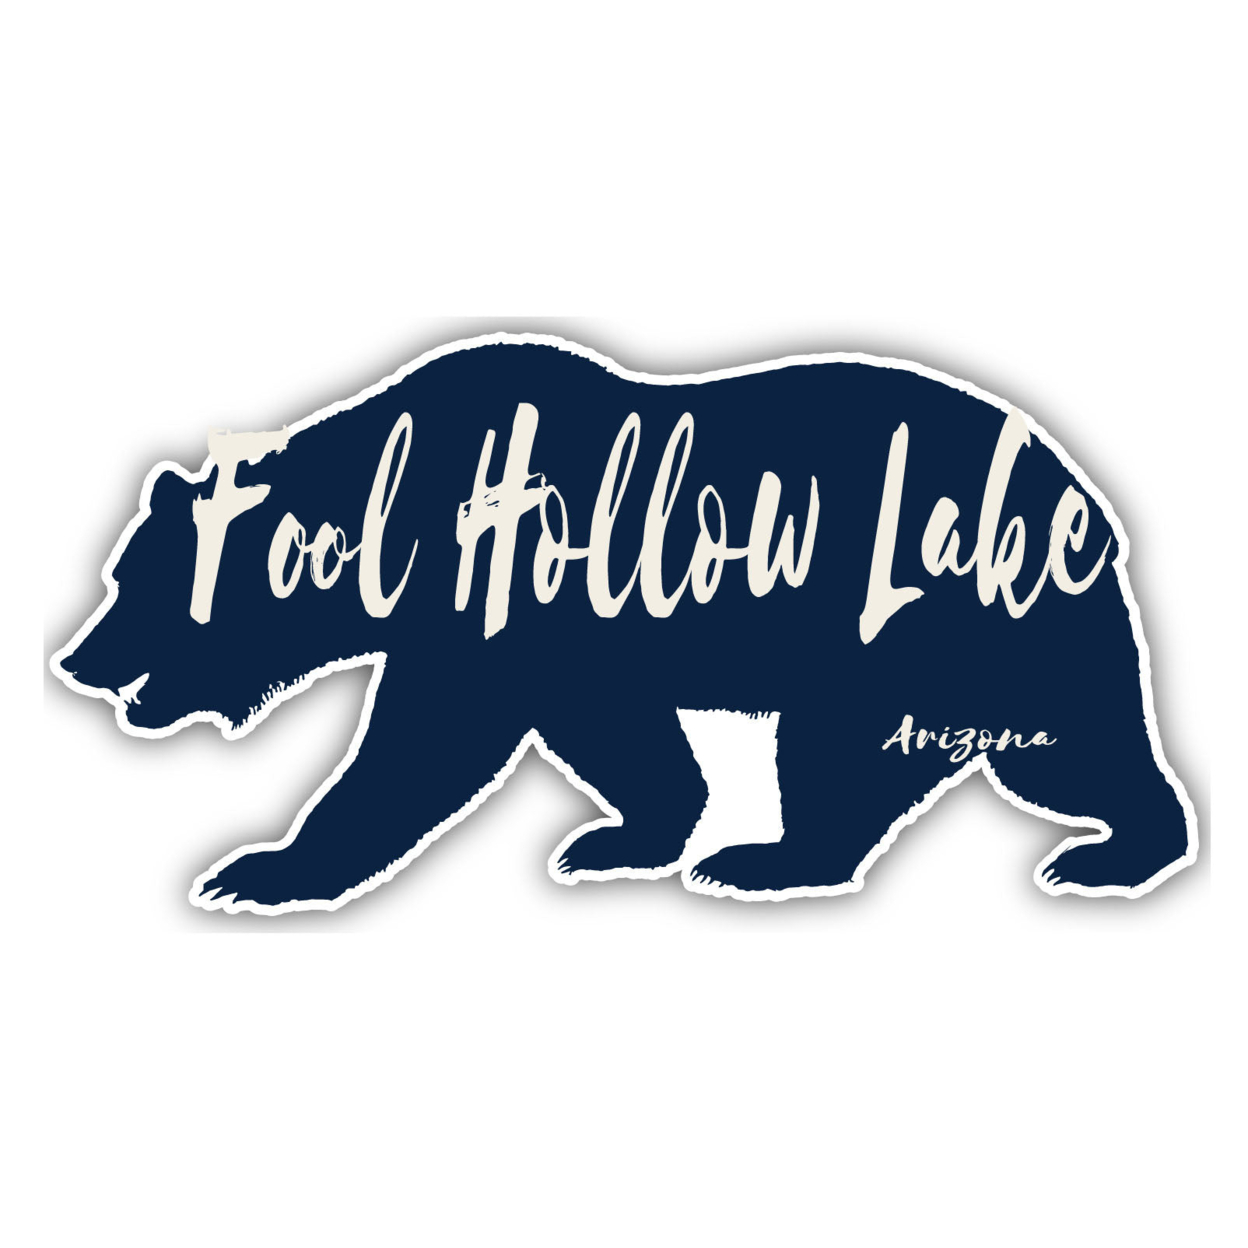 Fool Hollow Lake Arizona Souvenir Decorative Stickers (Choose Theme And Size) - Single Unit, 6-Inch, Tent